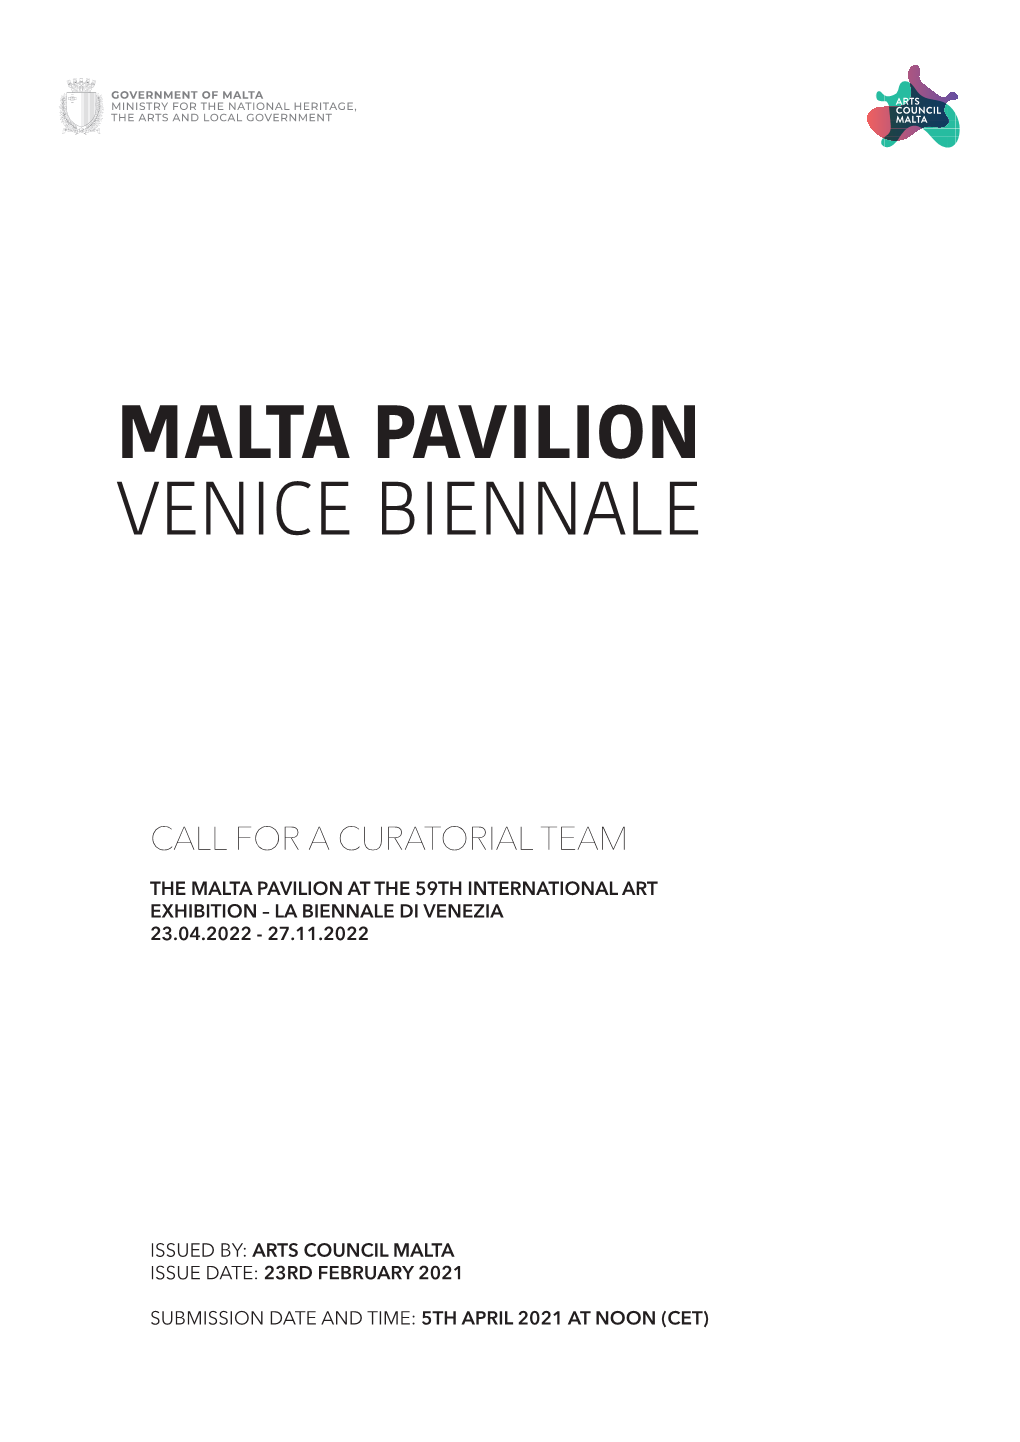 Malta Pavilion Venice Biennale